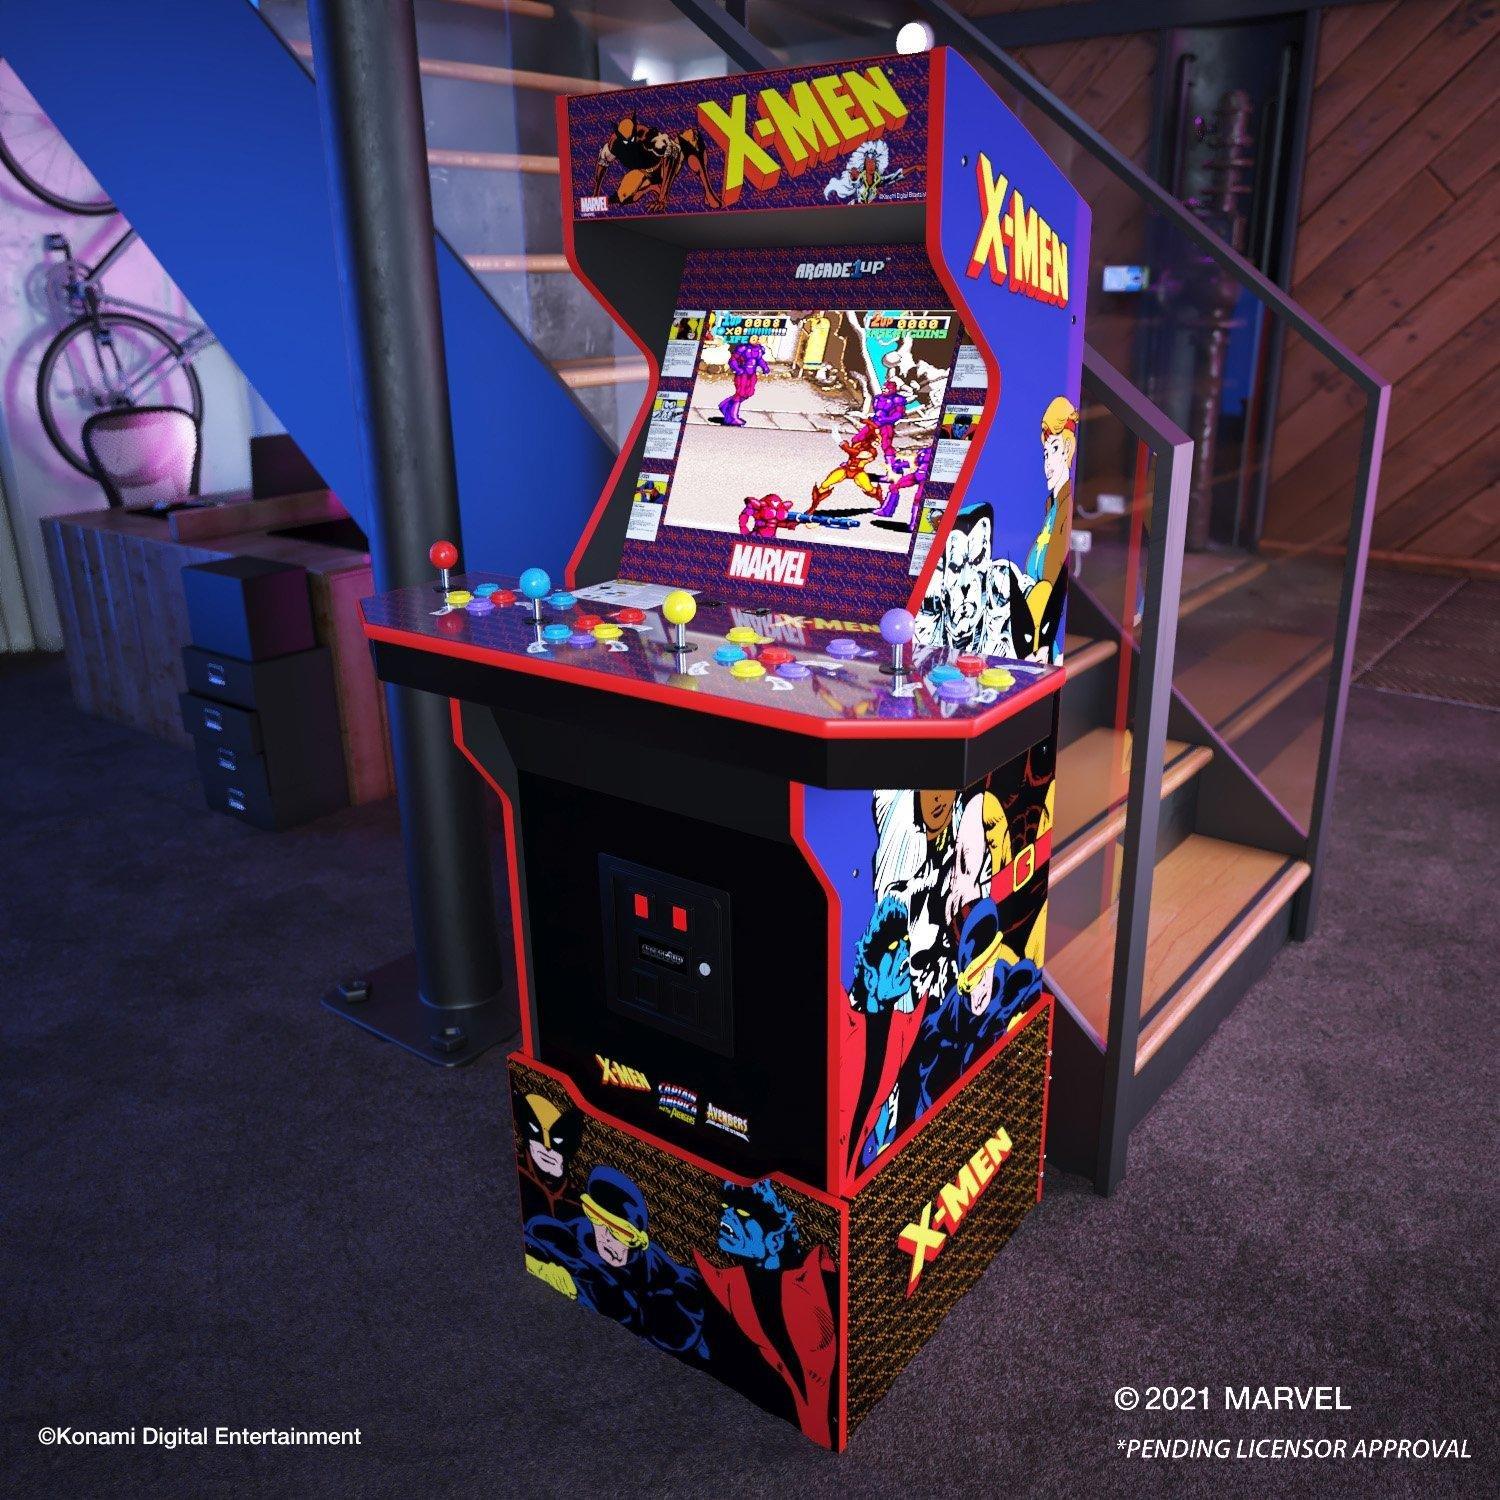 X-Men Six Player Arcade Cabinet multi game 50 monitor